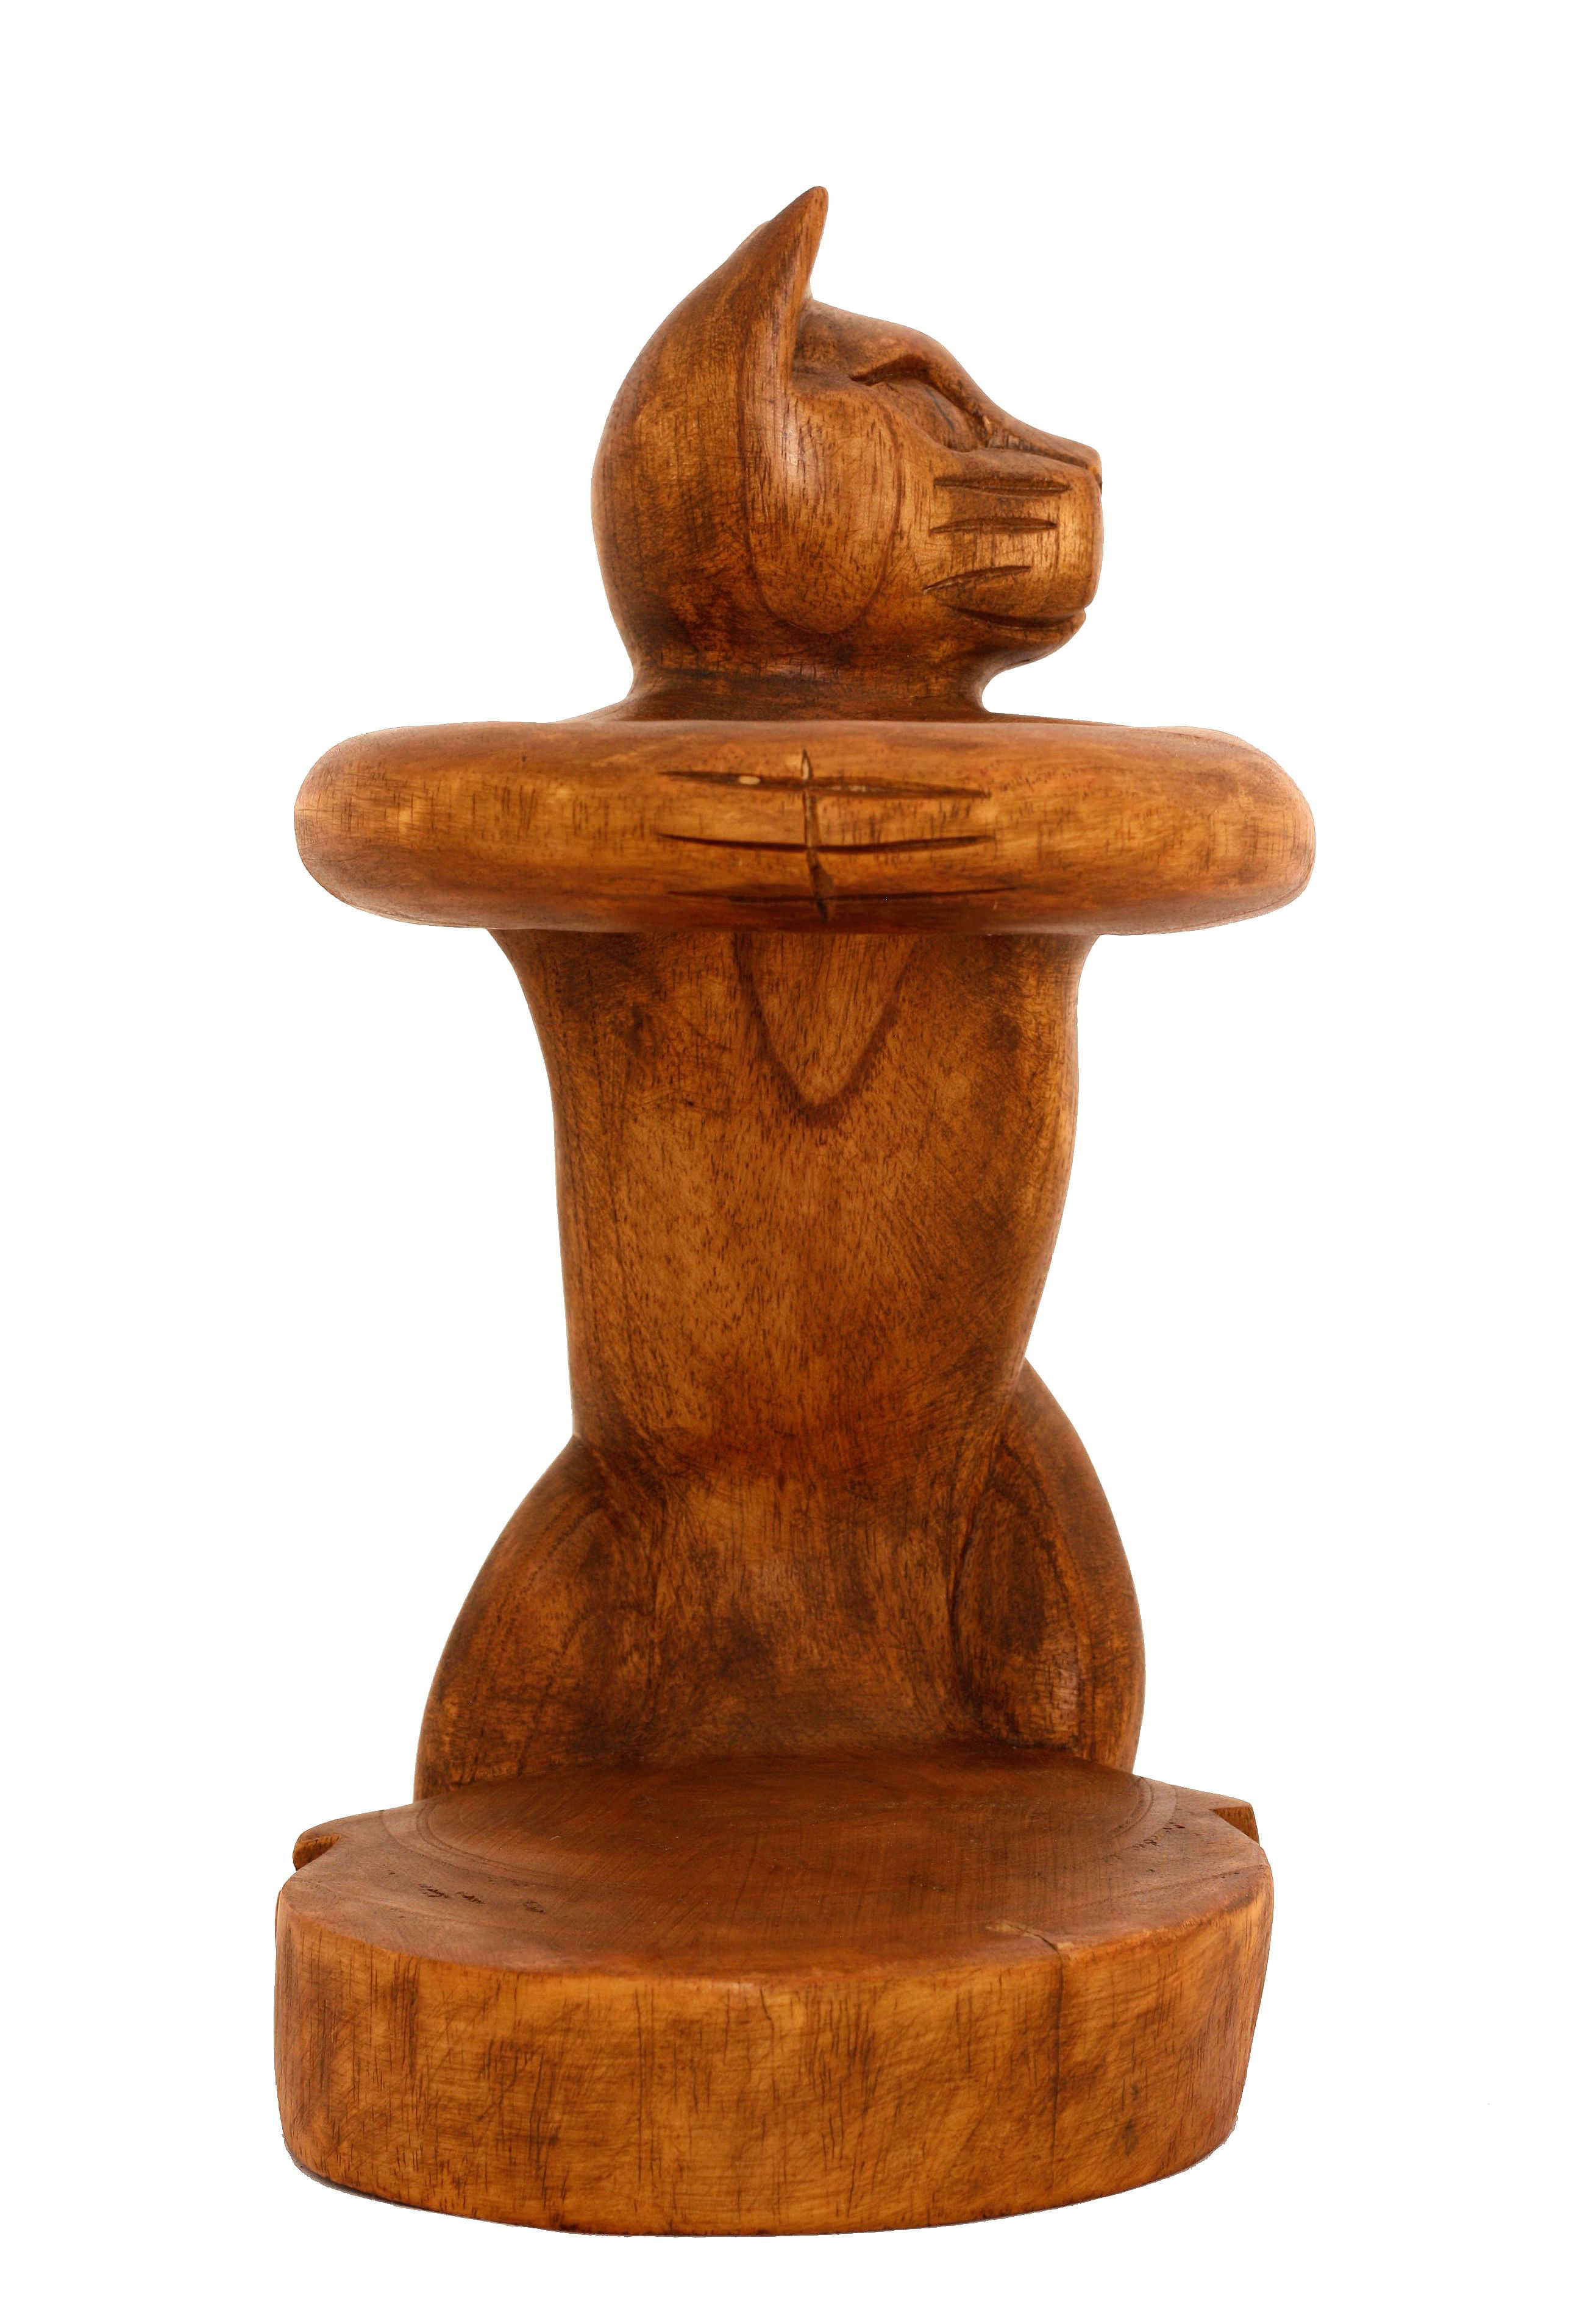 Wooden Hand Carved Siamese Cat Bottle Wine Rack Holder Home Decor Gift Art Wood 